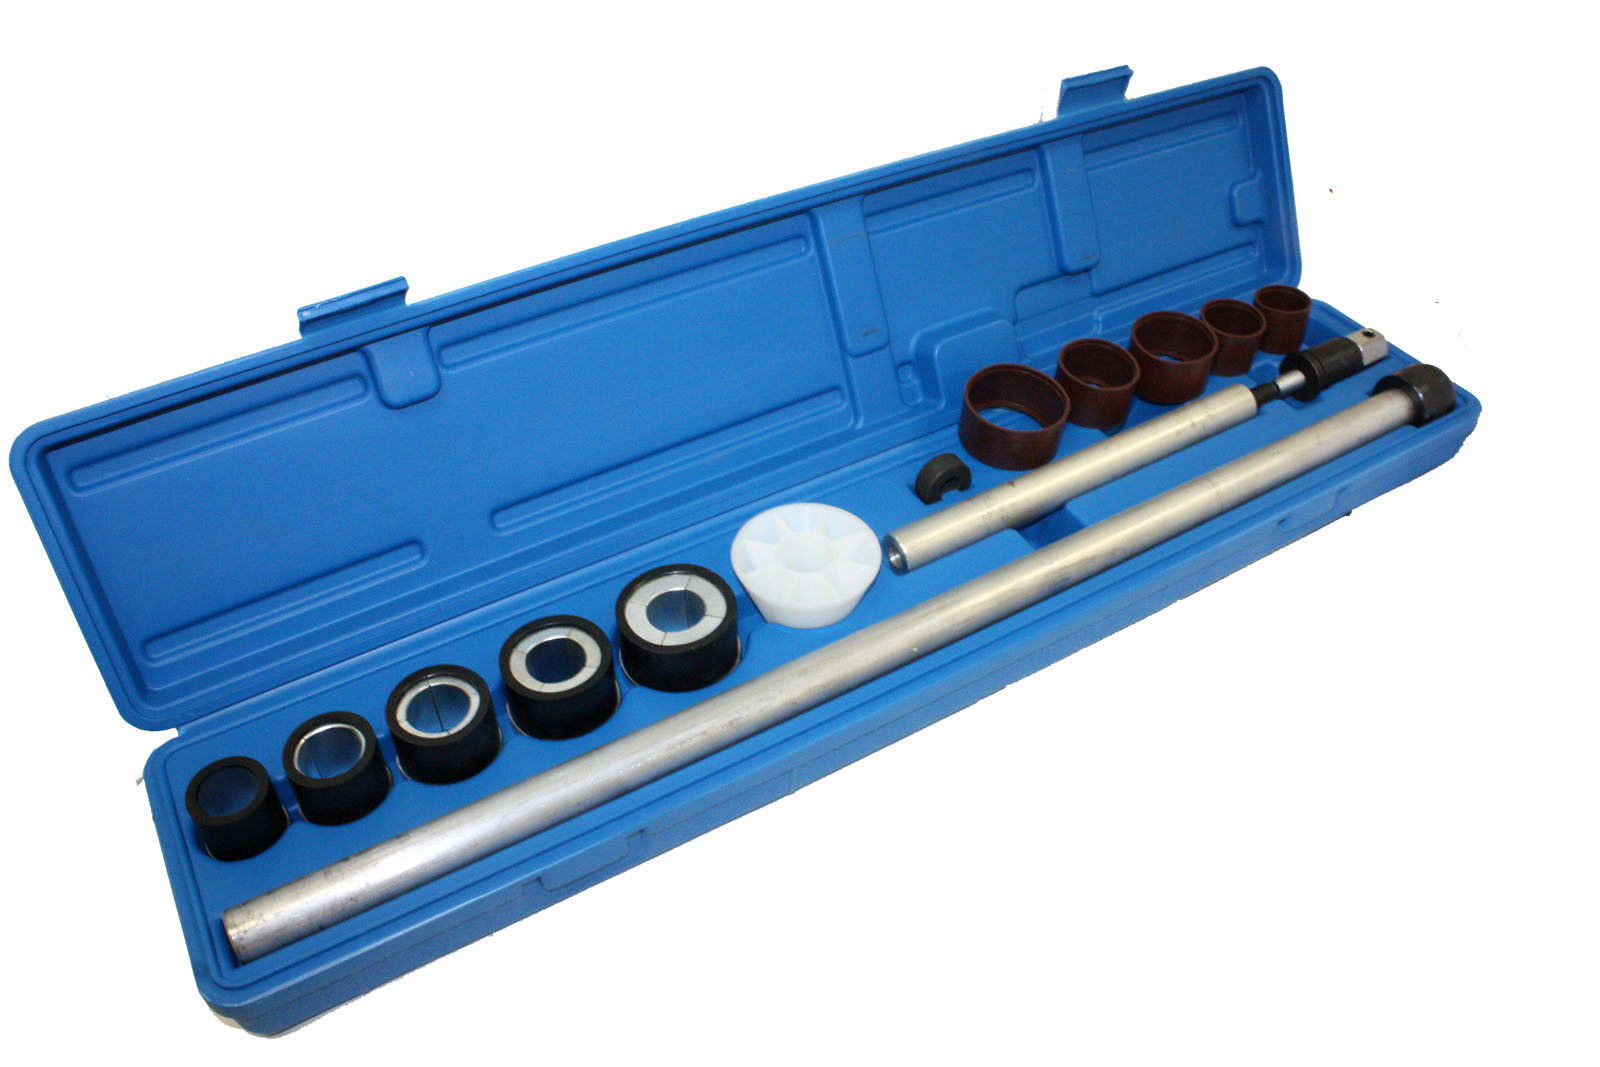 Mrcartool Camshaft Bearing Tool Installer Removal Kit 1.1 25 ~2.69 Automotive Universal Engine Timing Tool 